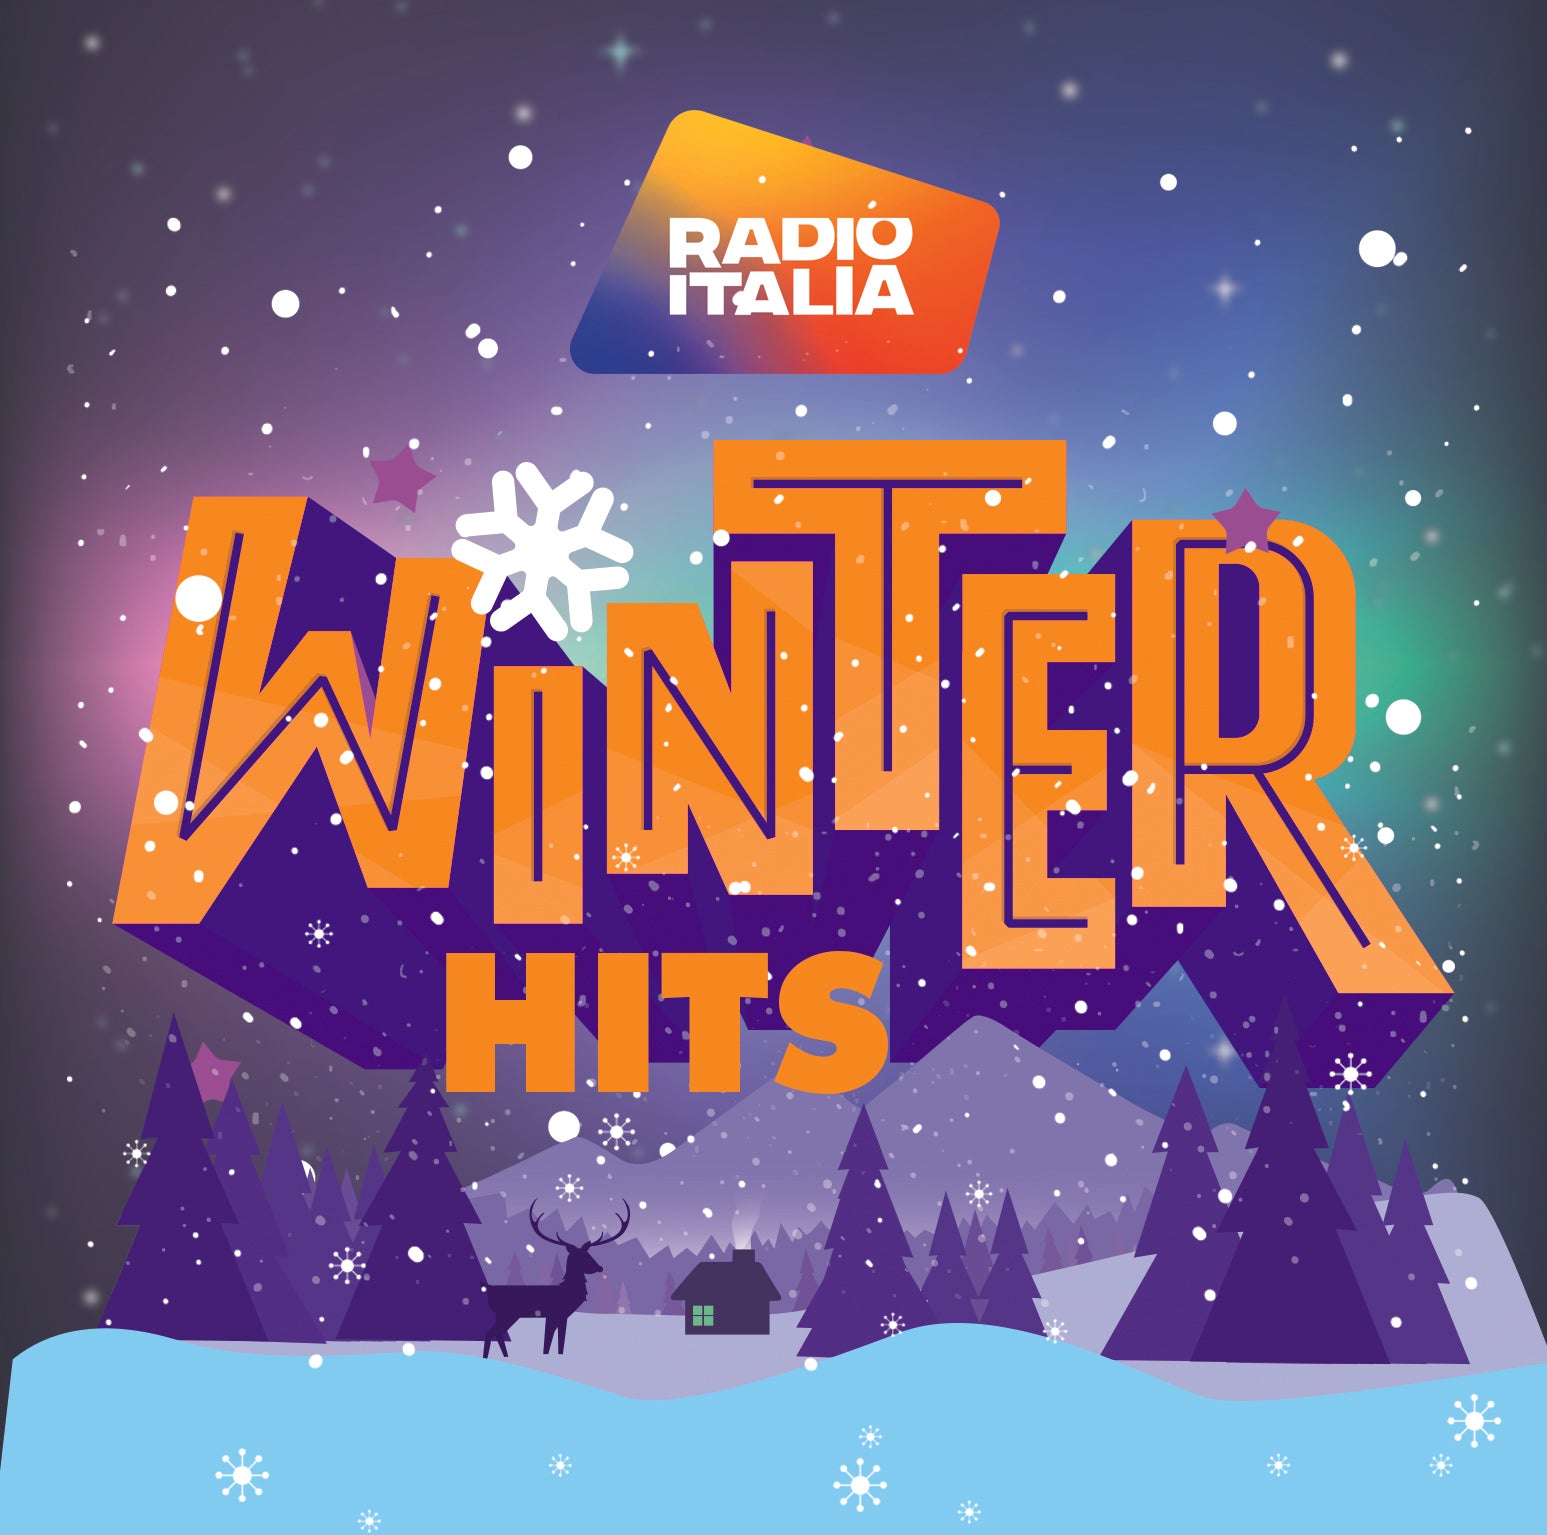 RADIO ITALIA WINTER HITS 2023